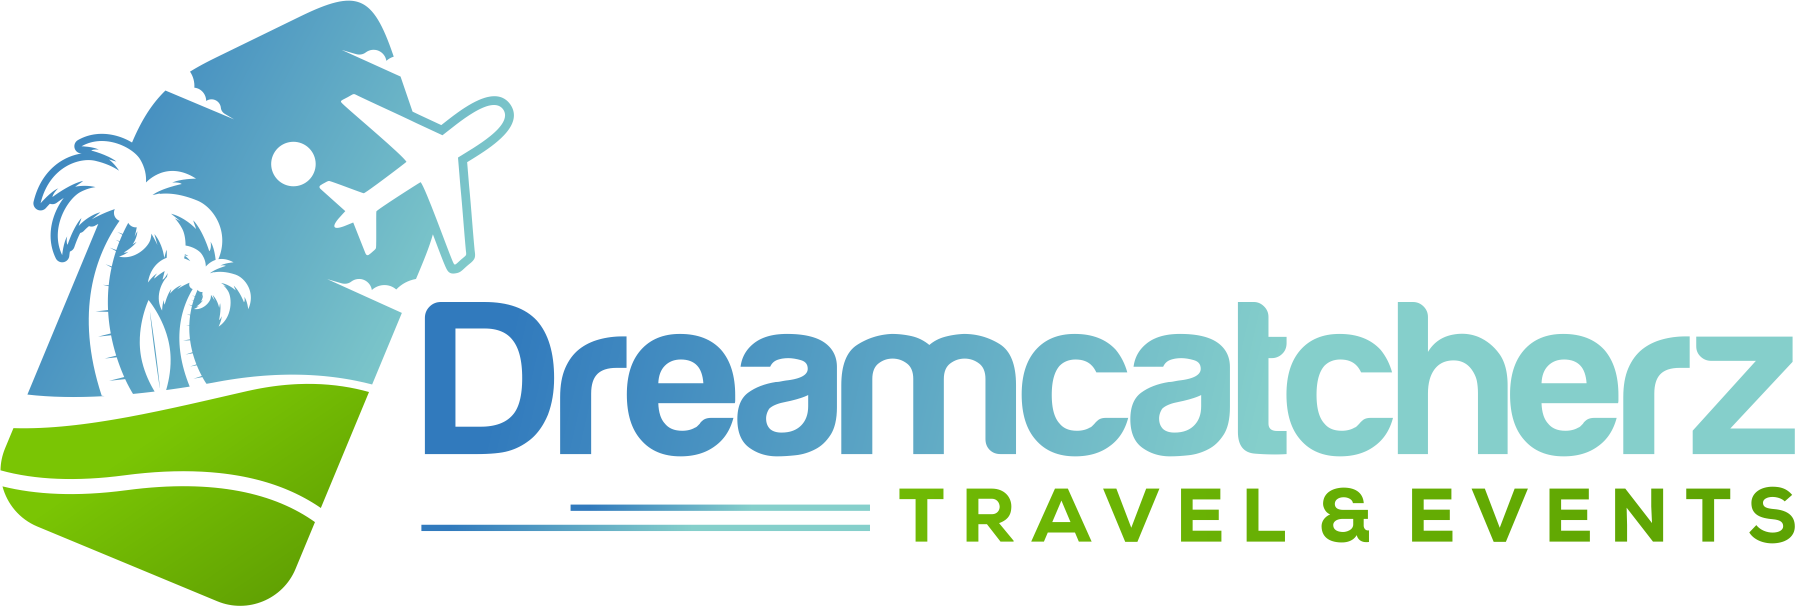 Dreamcatcherz Travel & Events,  by Accven Technologies Pvt. Ltd.